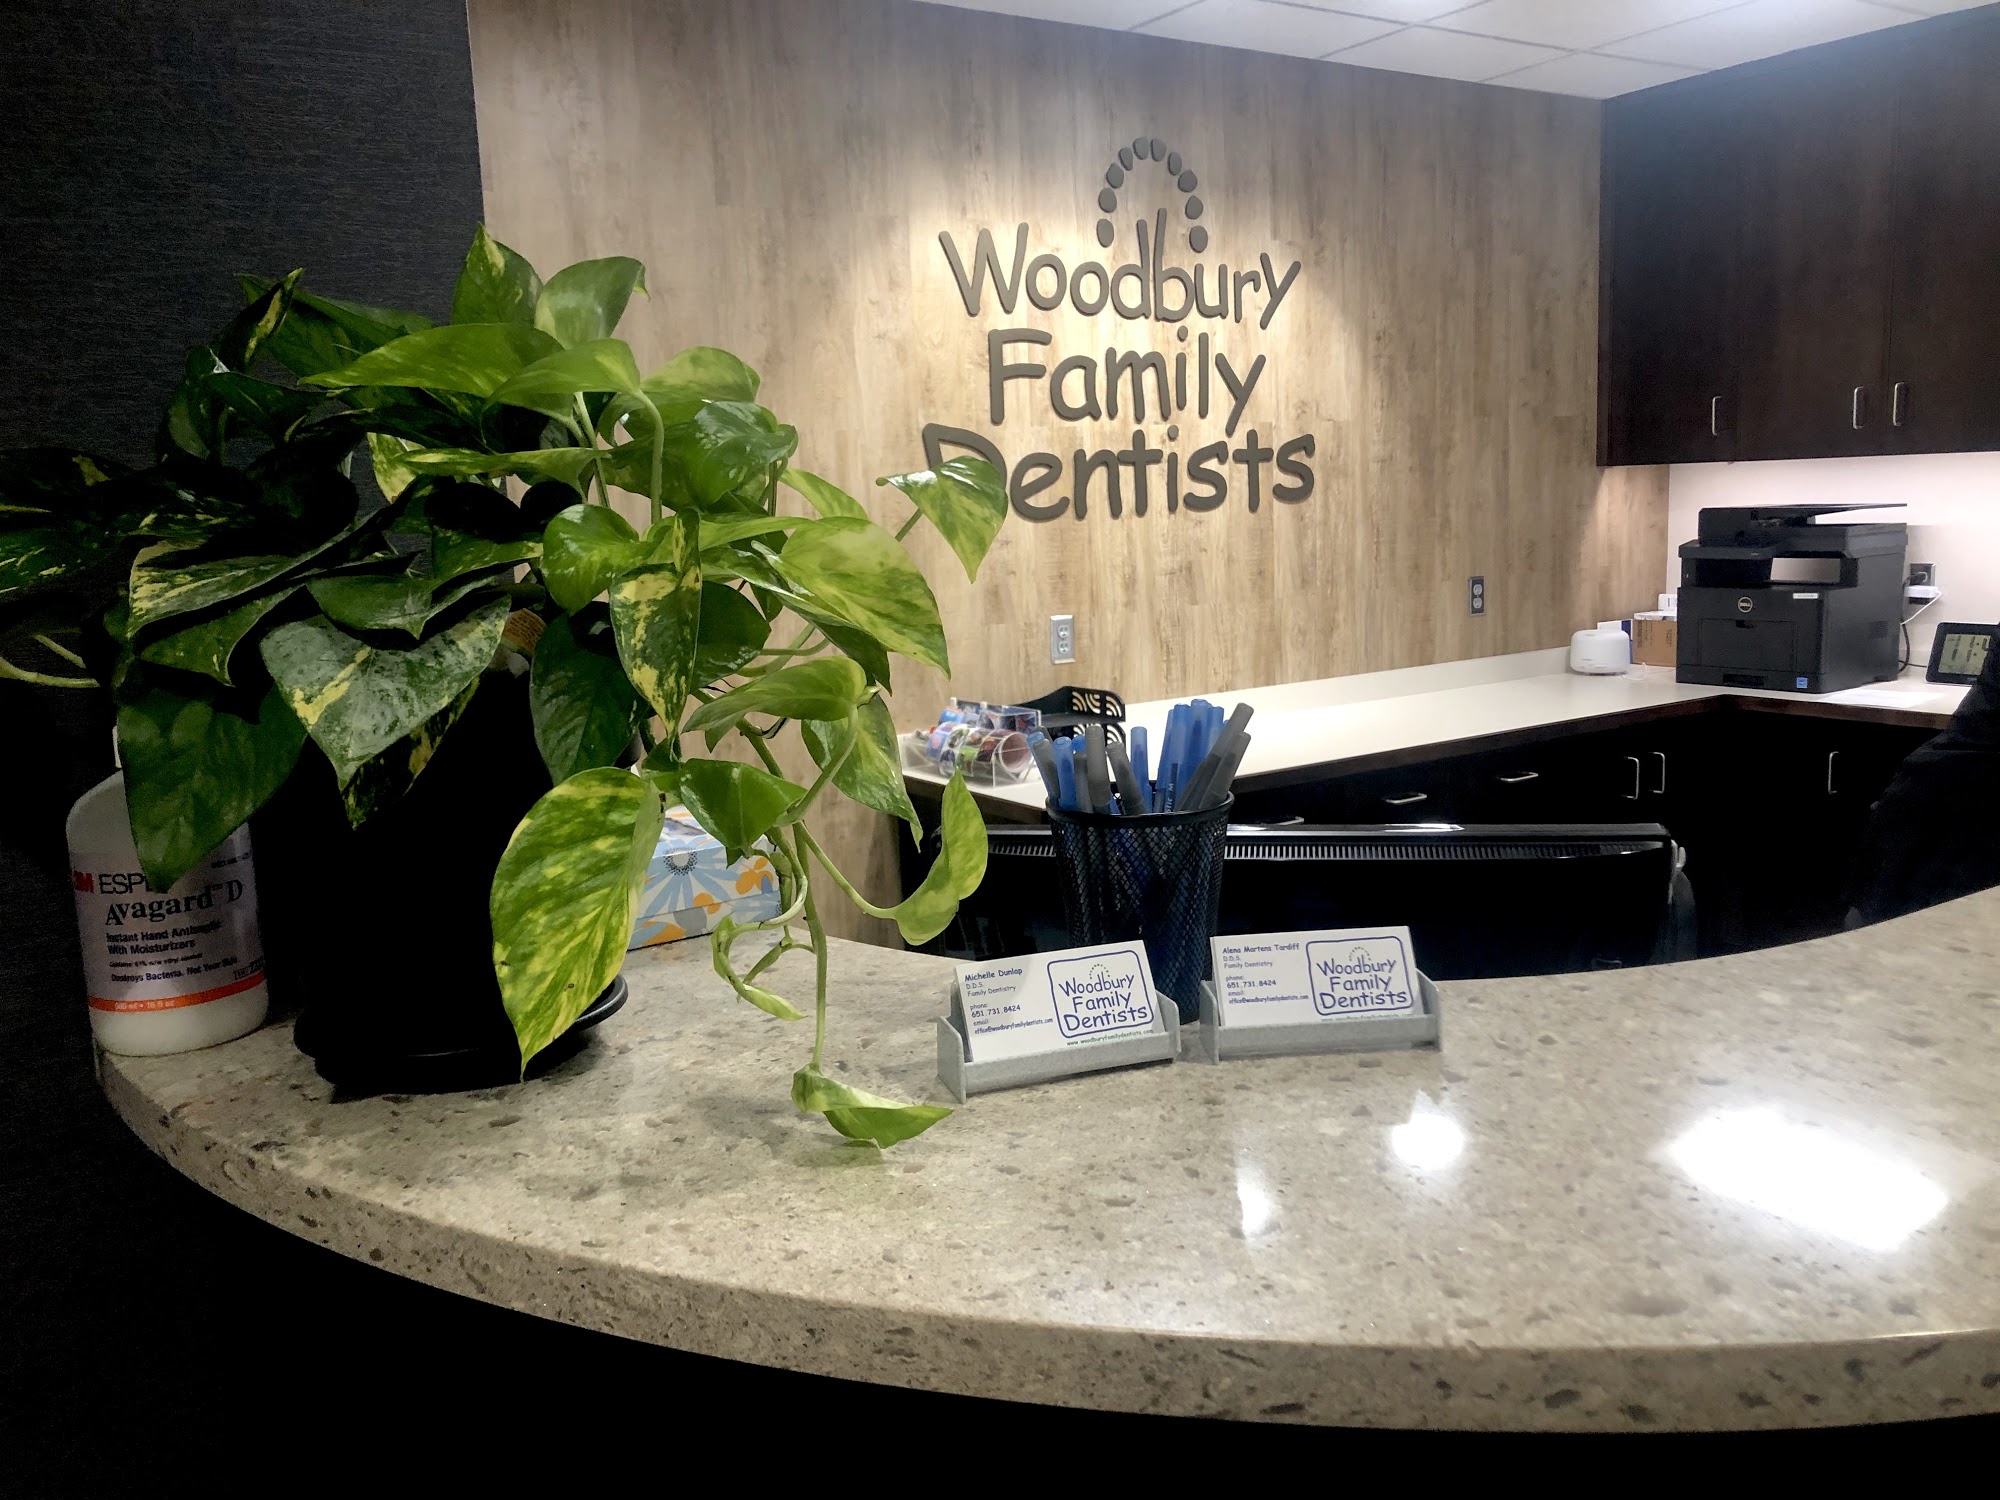 Woodbury Family Dentists